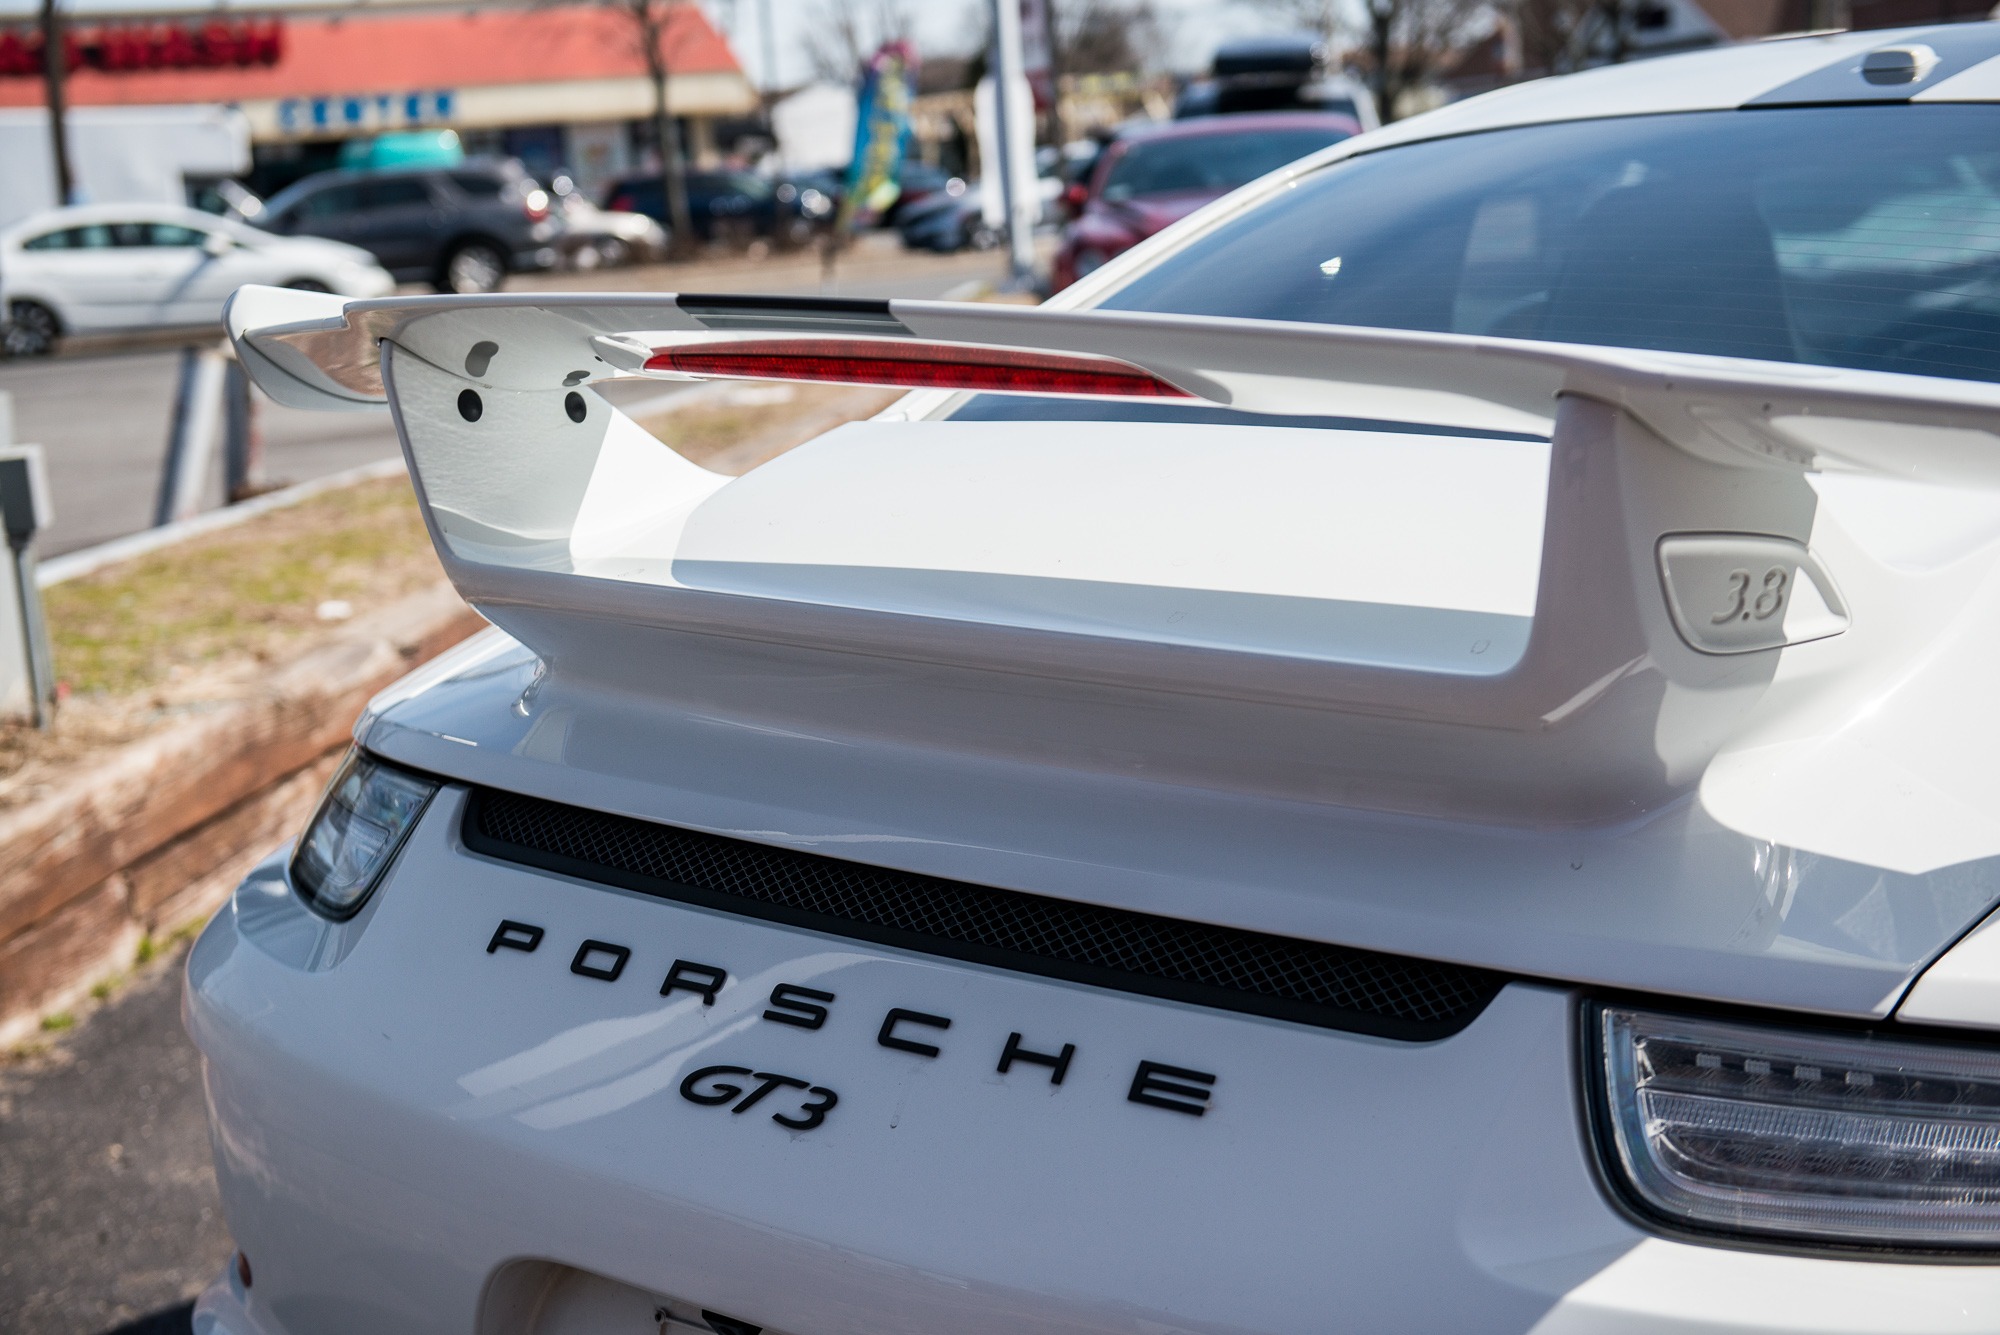 Porsche 911 GT3 For Rent, Long Island Exotic Cars